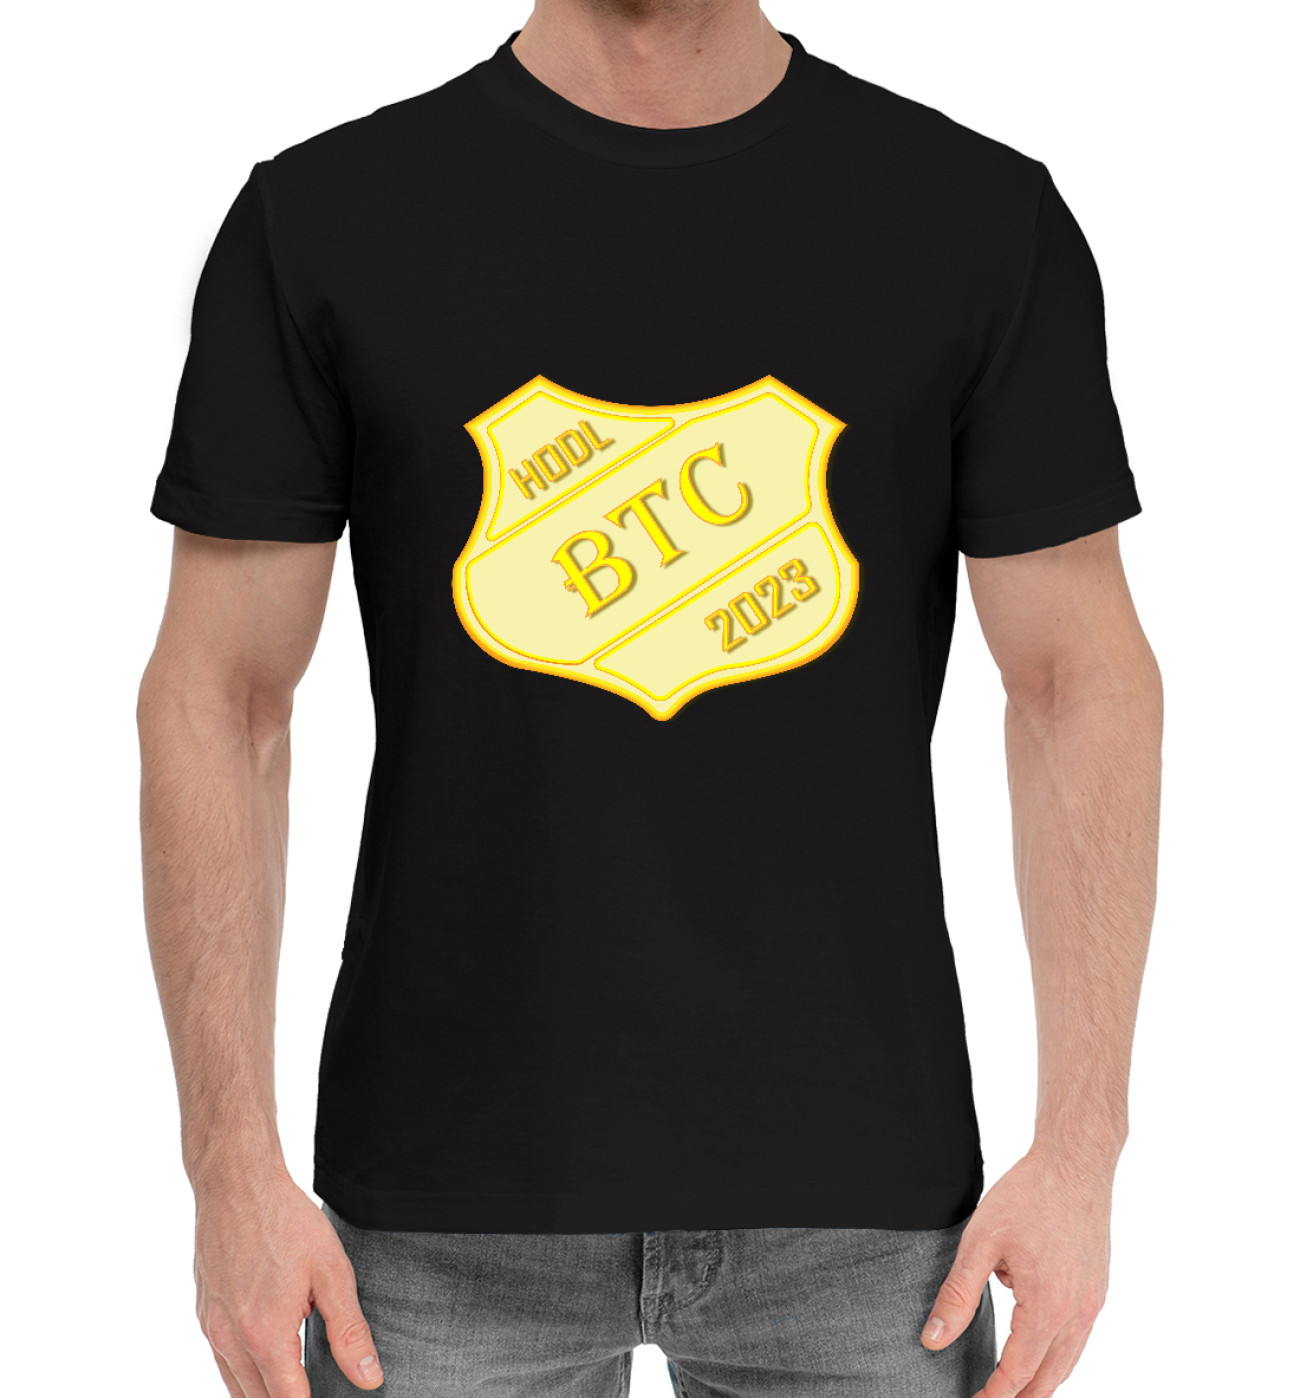 Мужская Хлопковая футболка Btc Hodl, артикул: CRC-378185-hfu-2